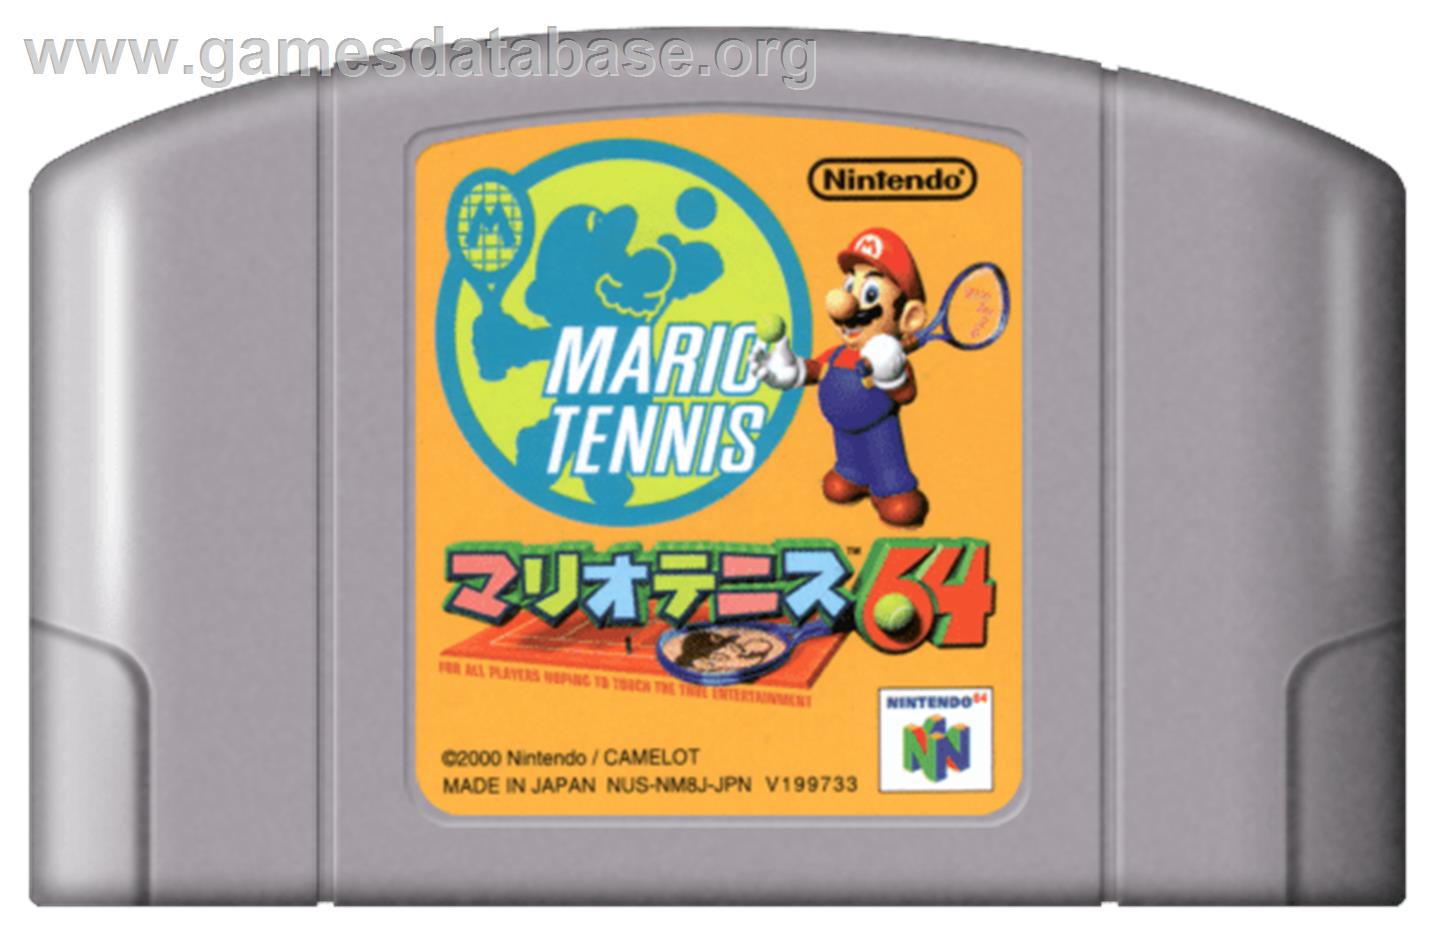 Mario Tennis 64 - Nintendo N64 - Artwork - Cartridge